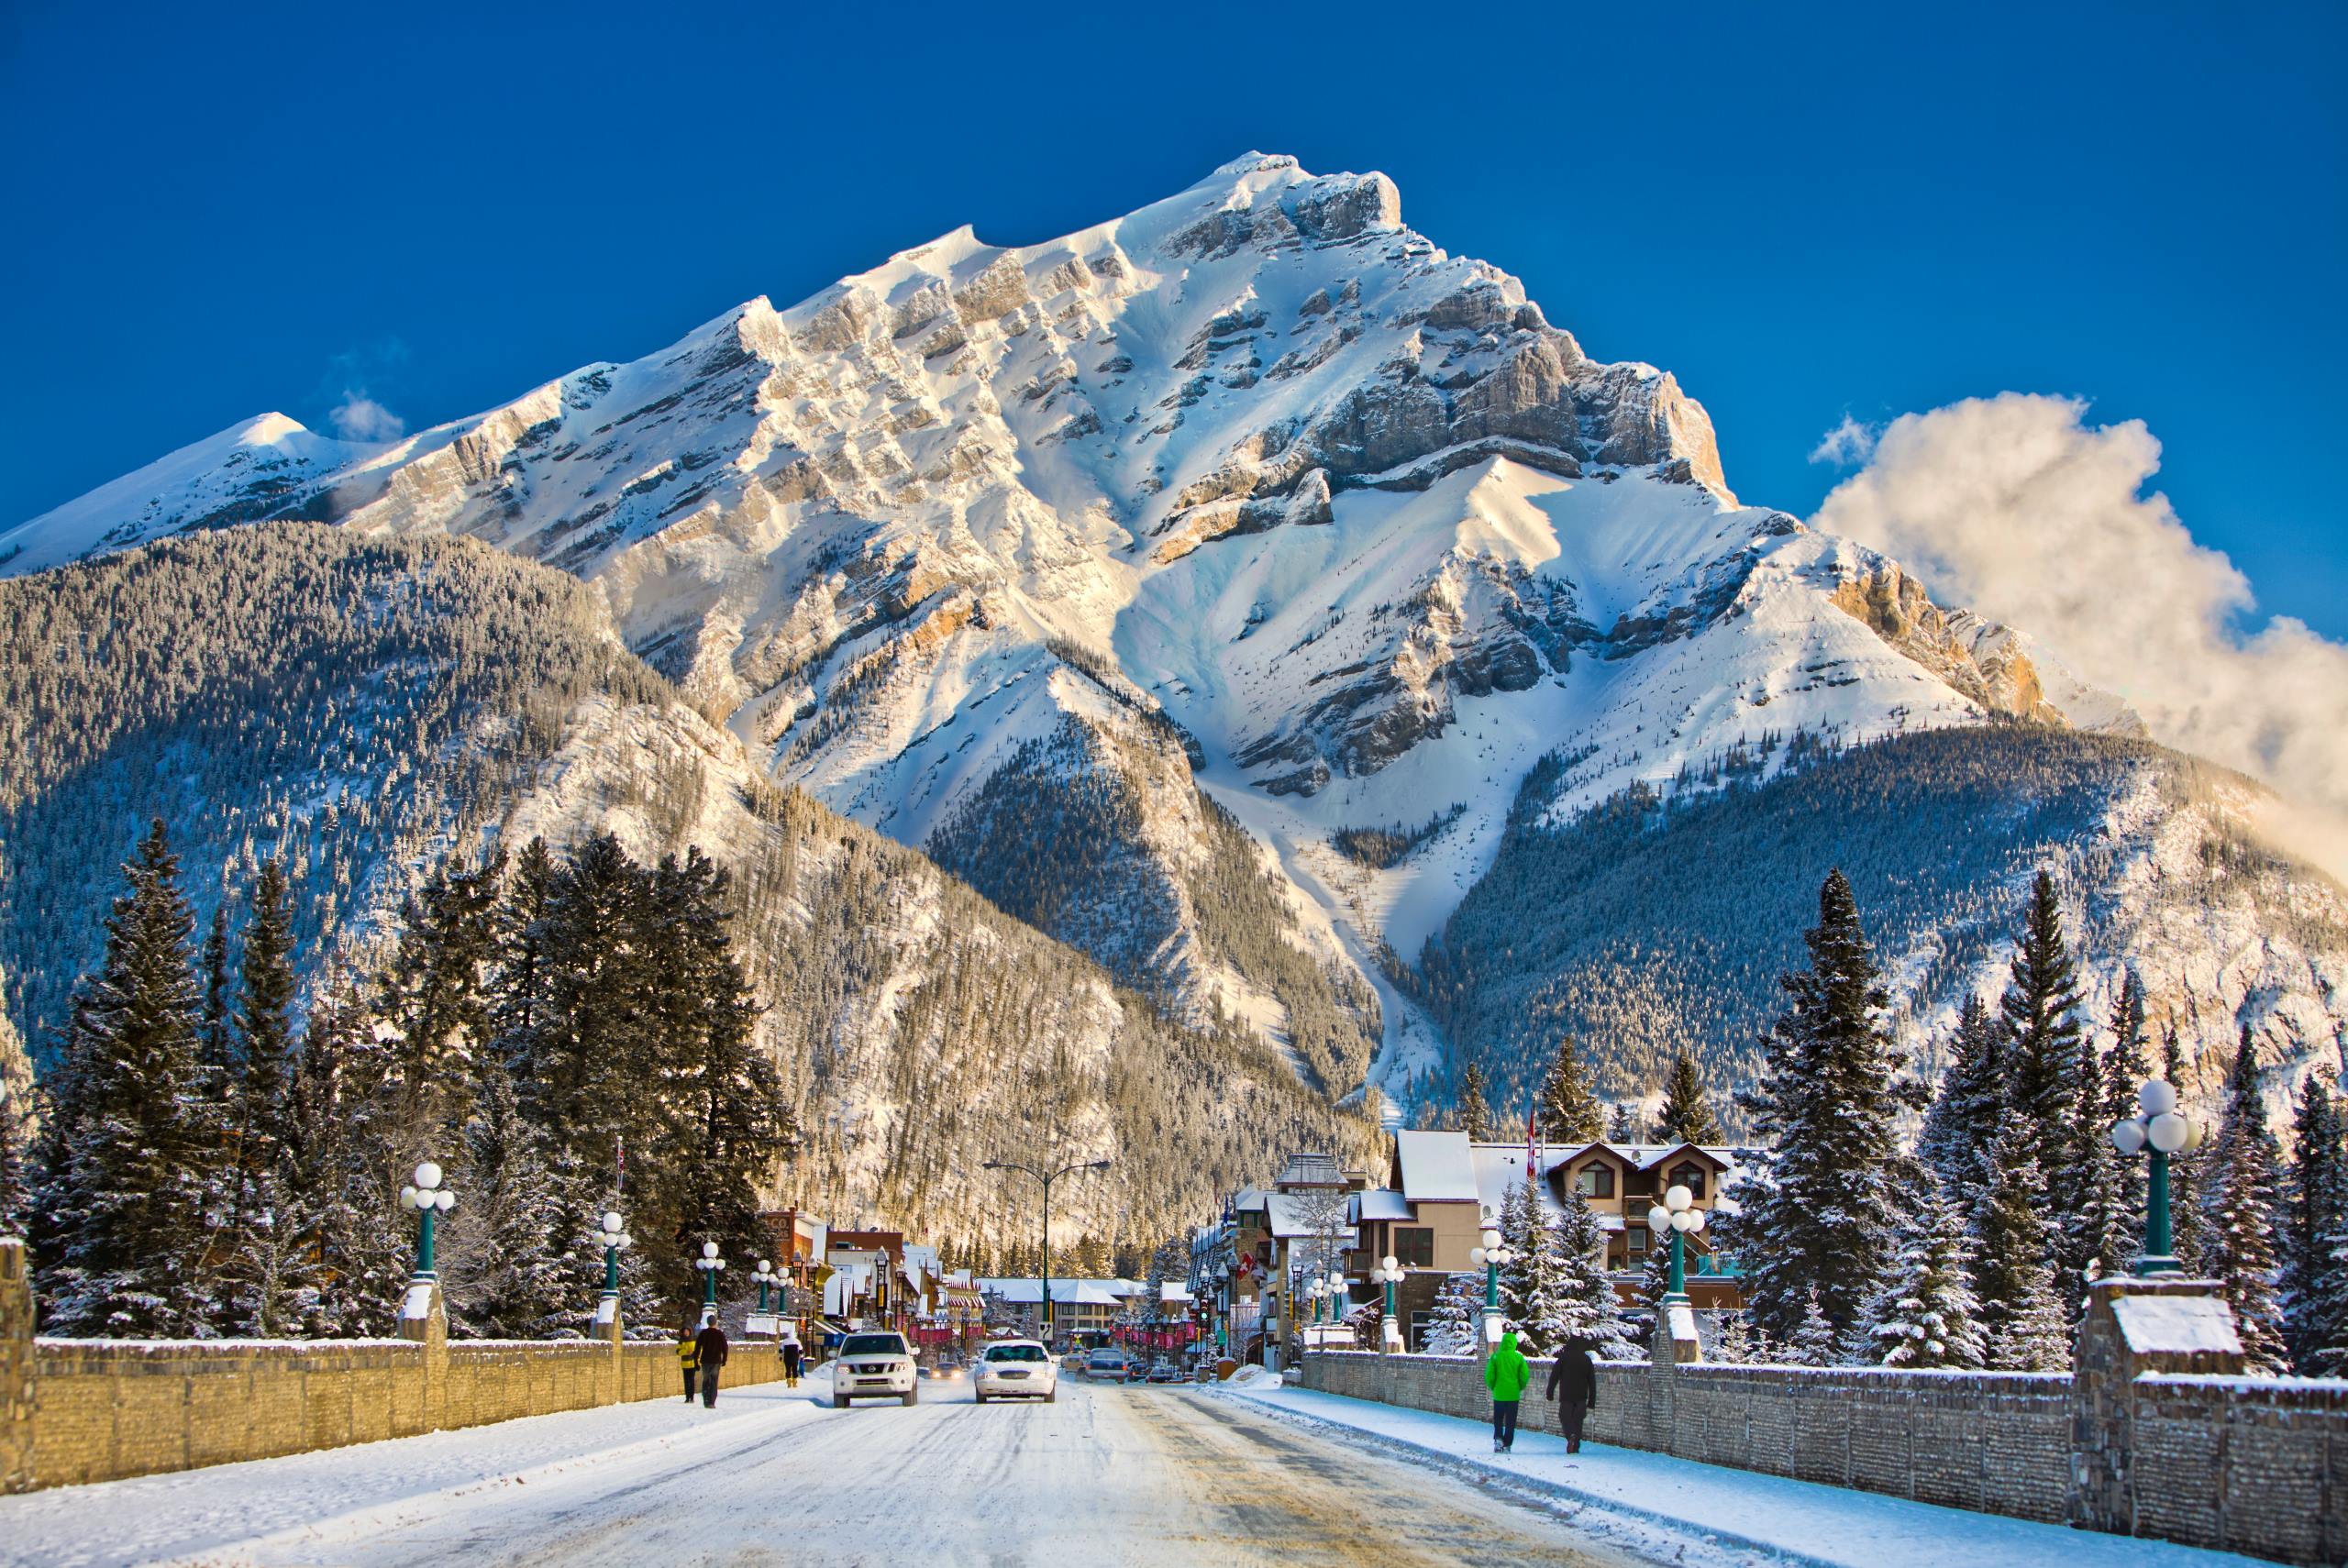 The iconic Banff Avenue